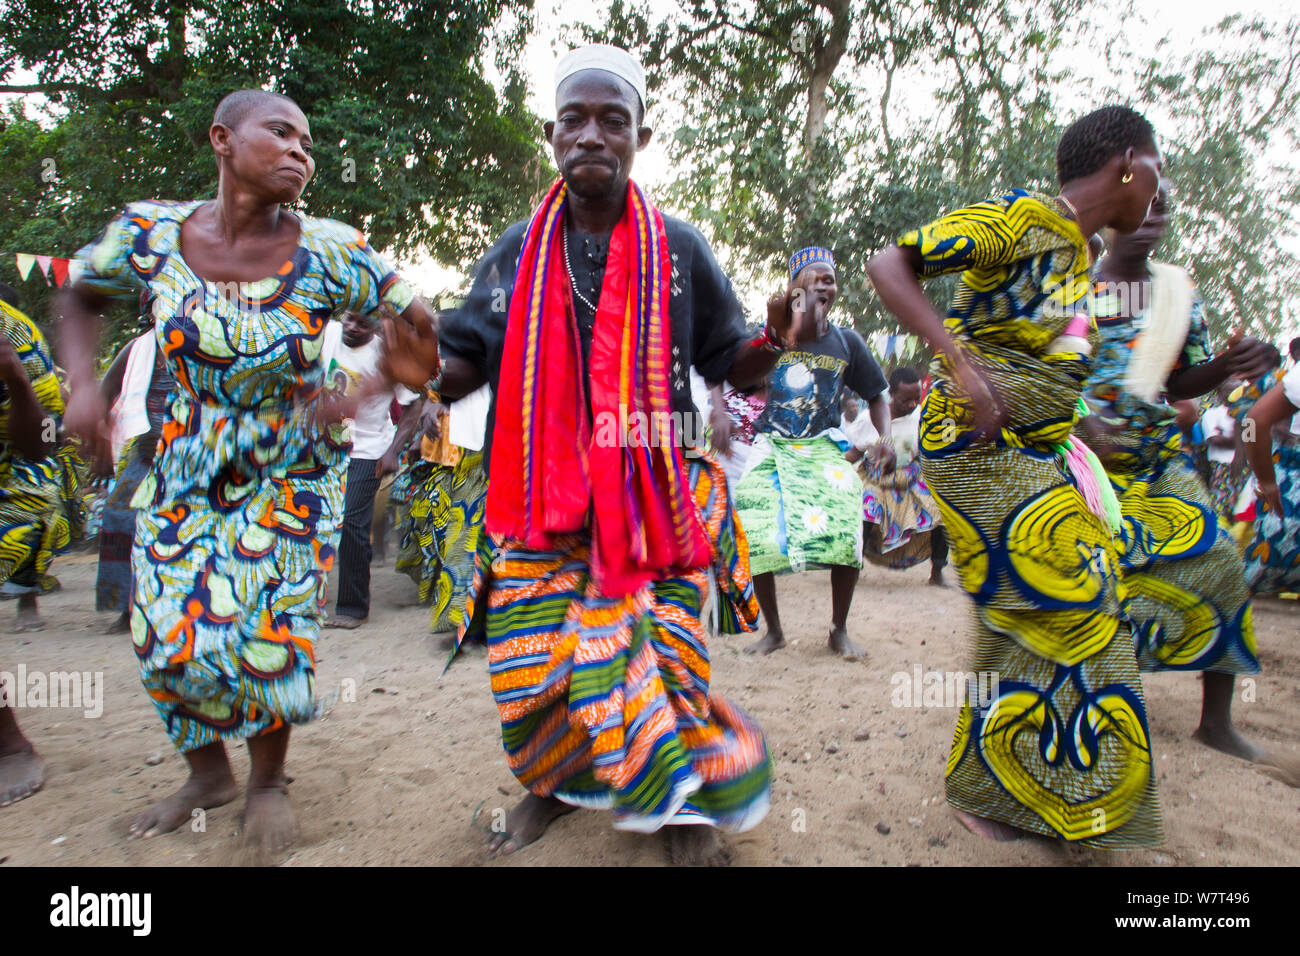 Dancers during a traditional Zangbeto Ceremony, Benin, February 2011. Stock Photo